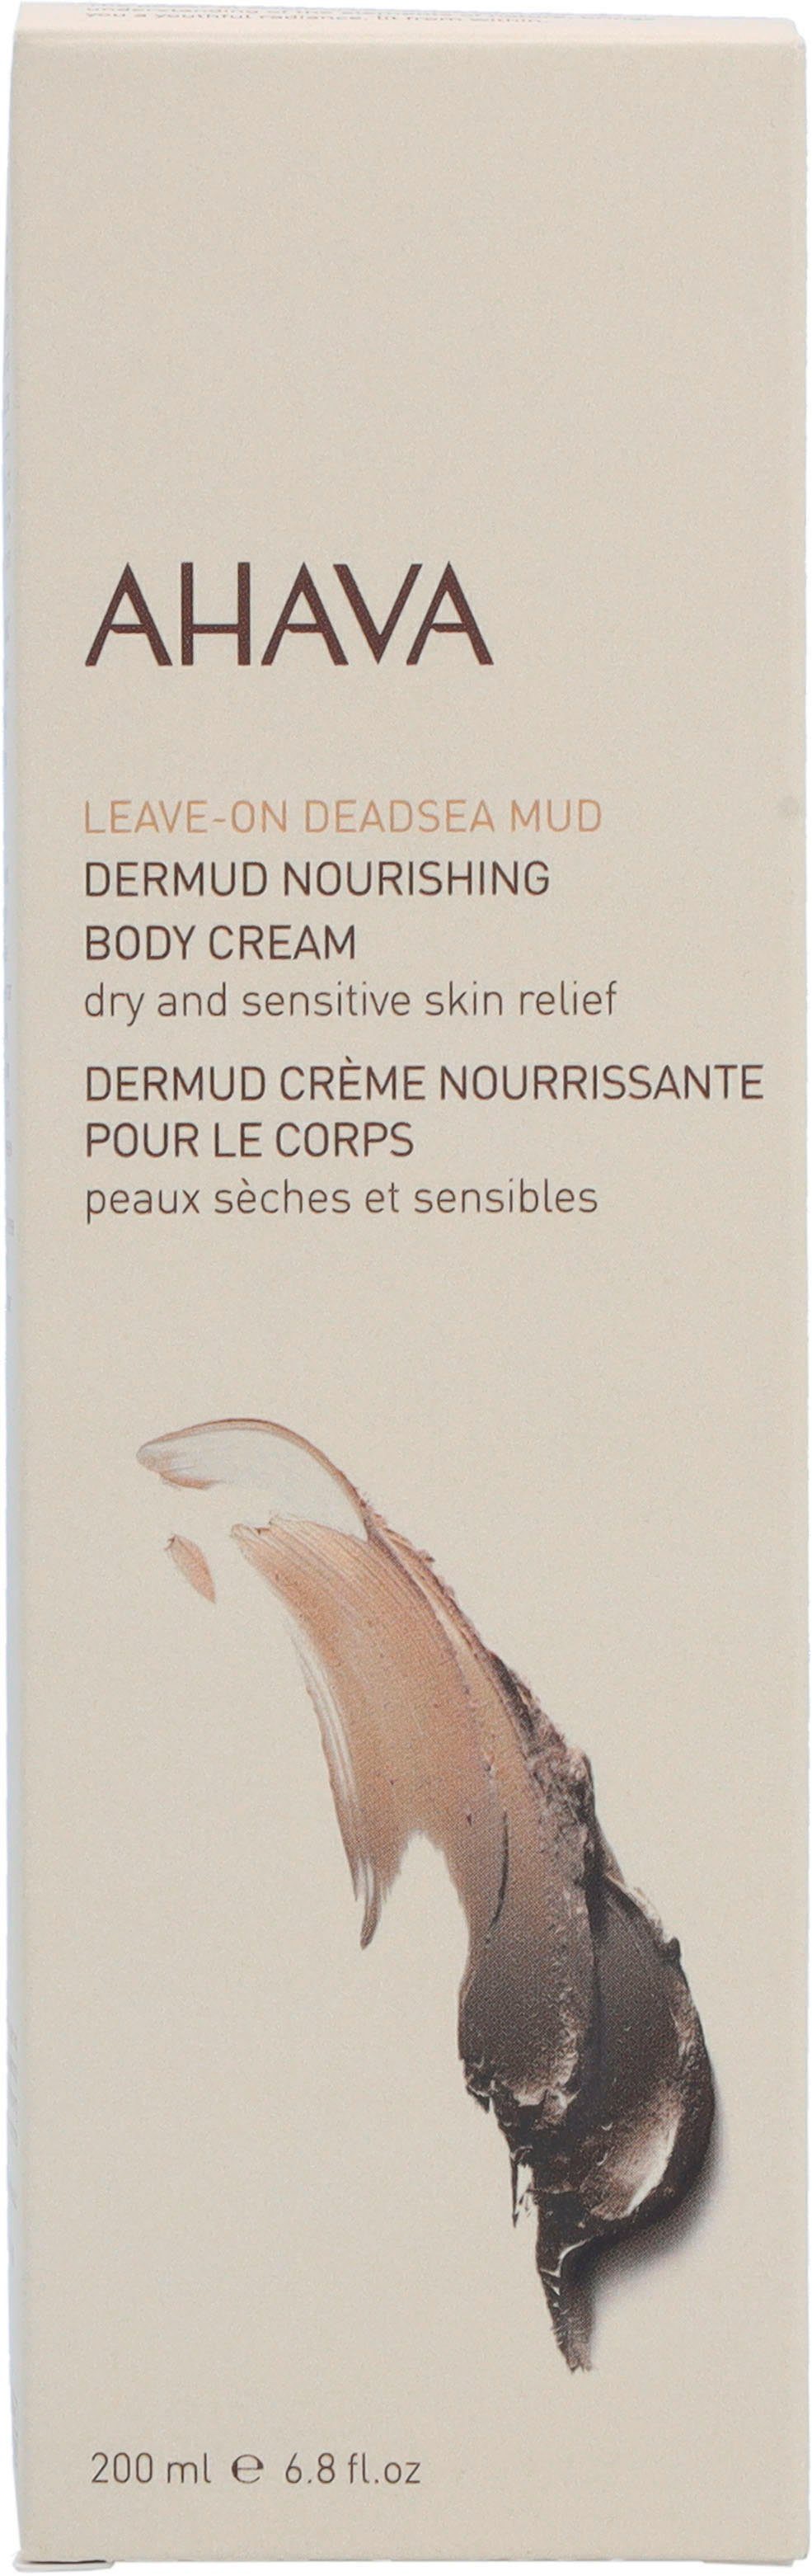 Body Körpercreme Mud Deadsea Dermud AHAVA Cream Nourishing